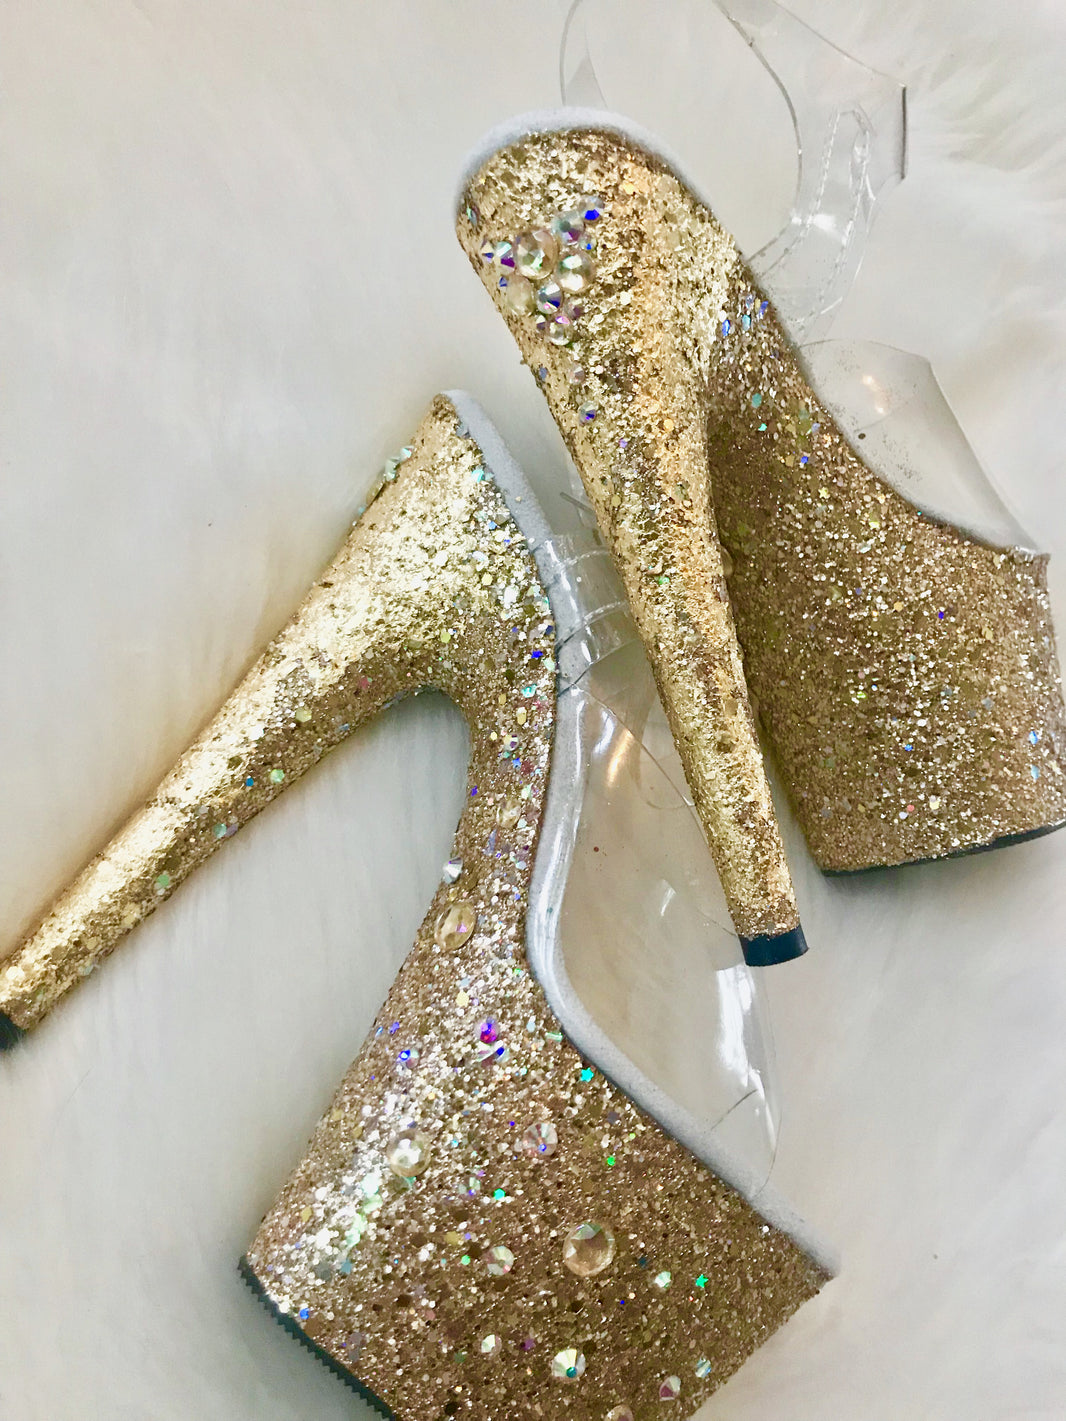 Nightshade Designs Custom Exotic Glitter Heels